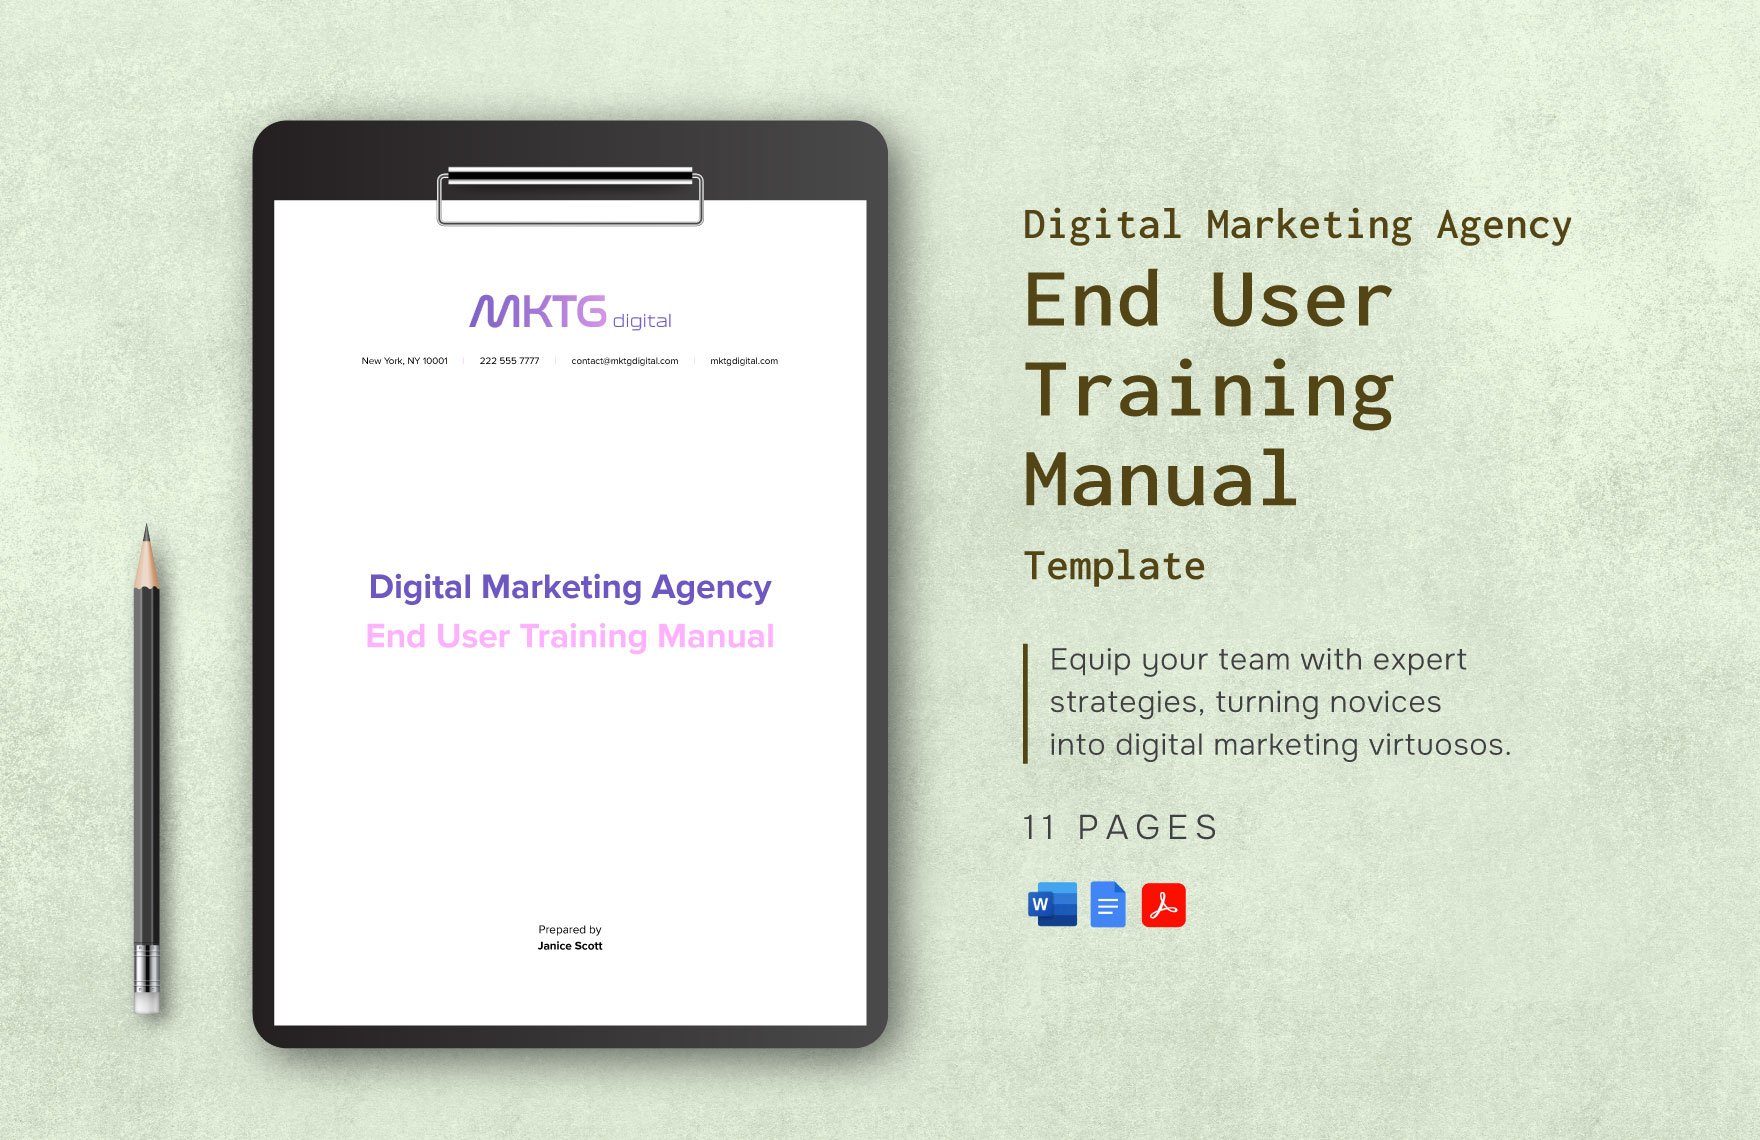 Digital Marketing Agency End User Training Manual Template